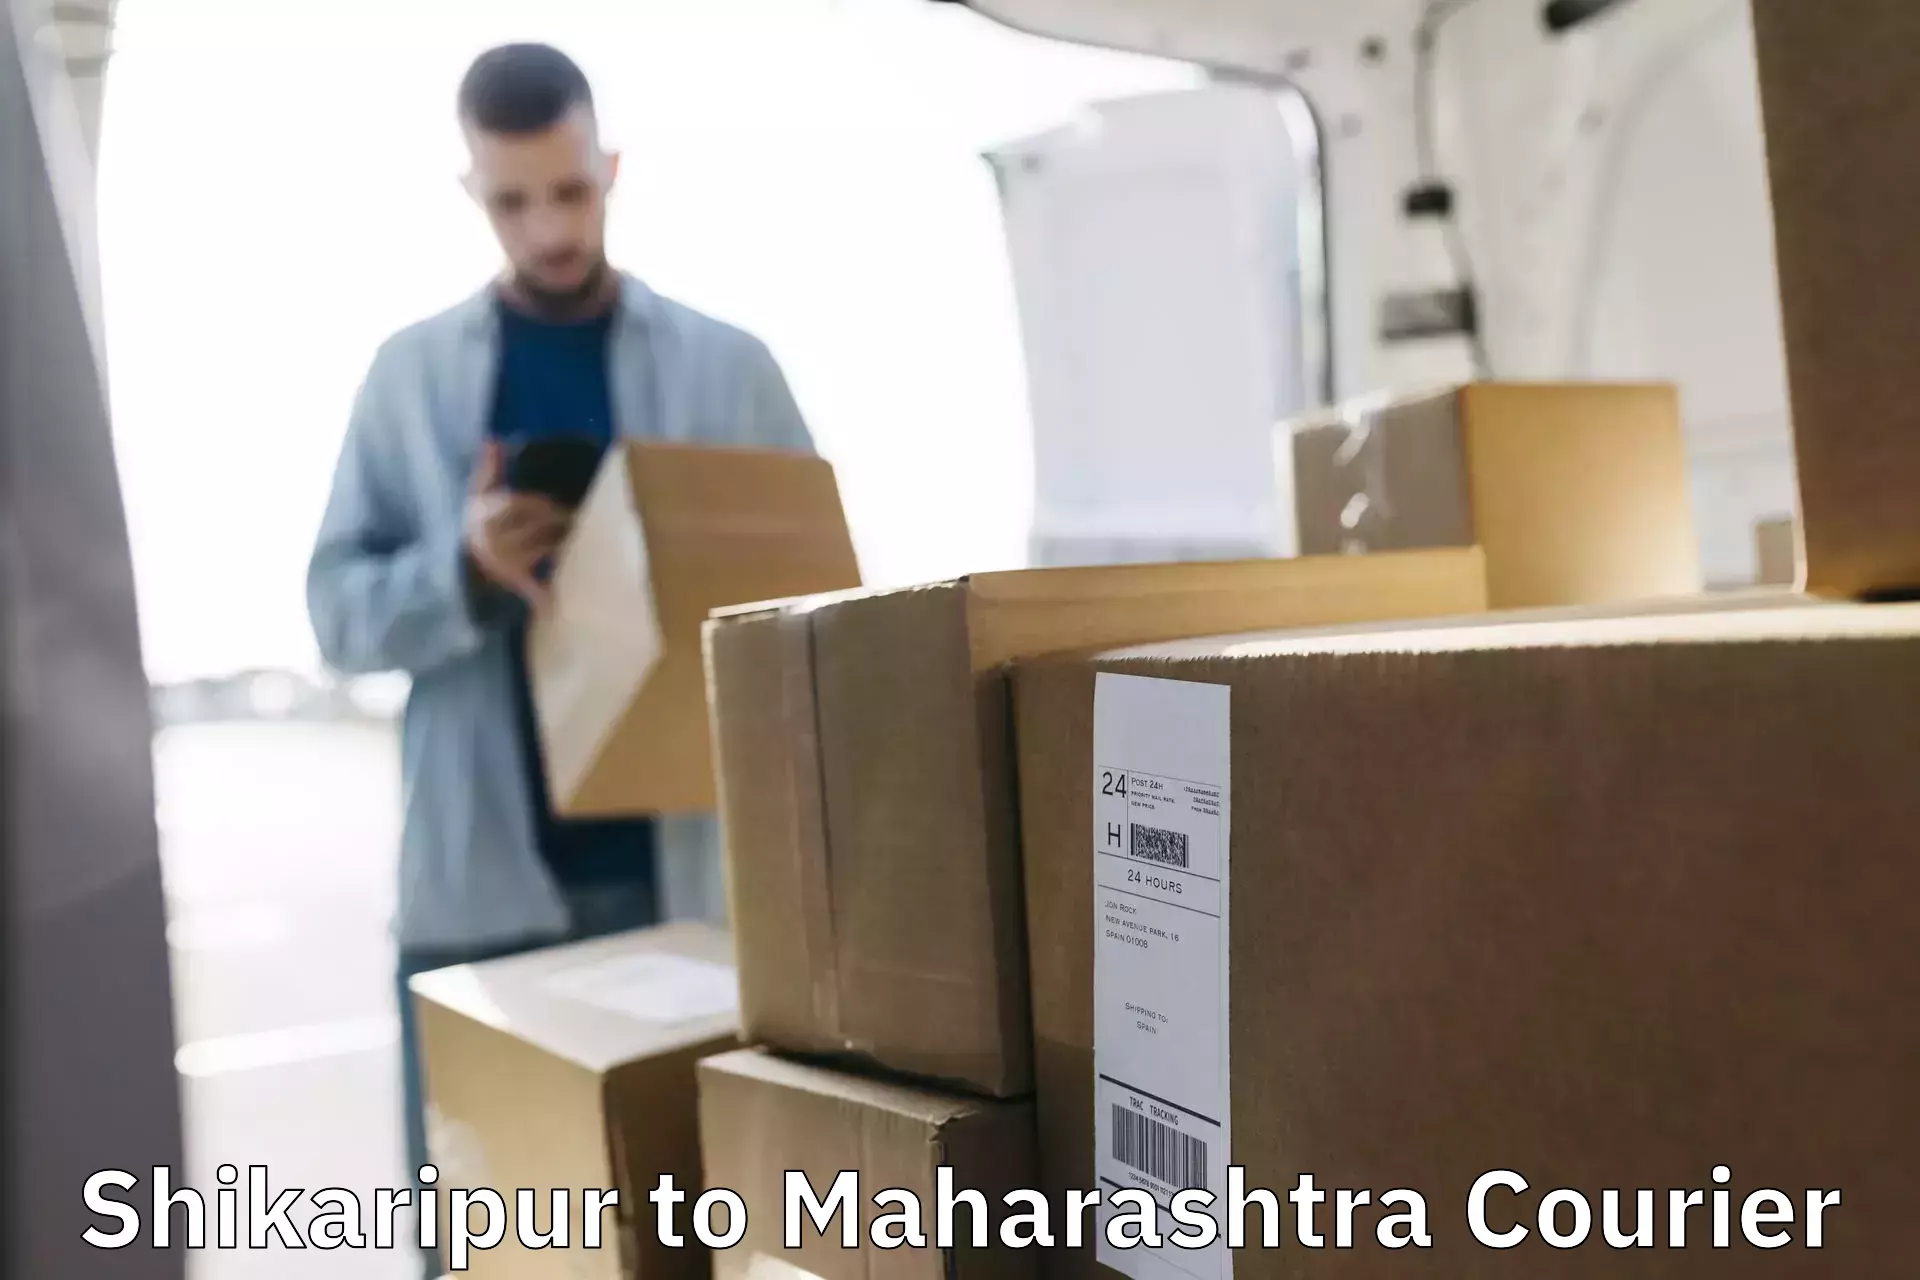 High-speed parcel service Shikaripur to Jintur